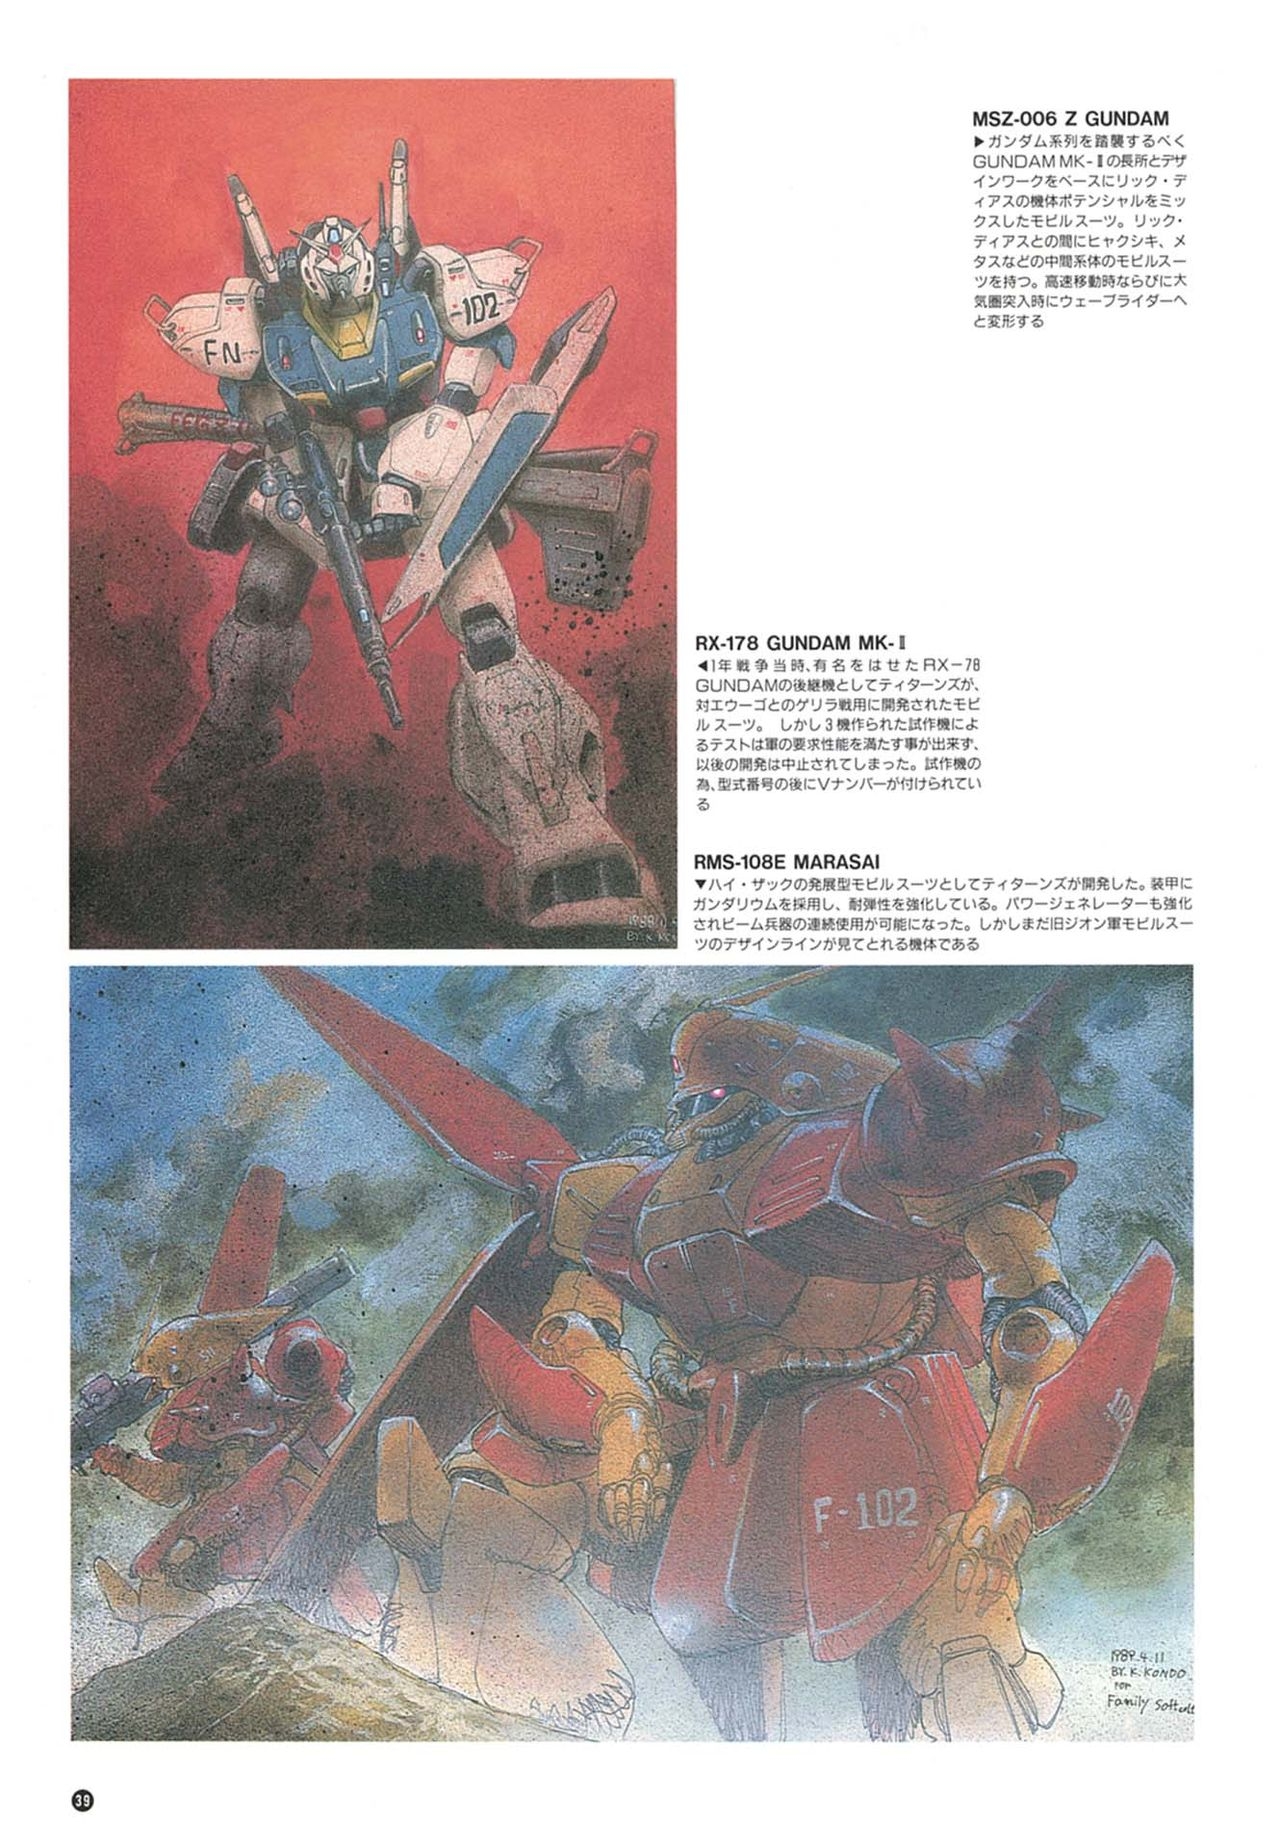 [Kazuhisa Kondo] Kazuhisa Kondo 2D & 3D Works - Go Ahead - From Mobile Suit Gundam to Original Mechanism 38